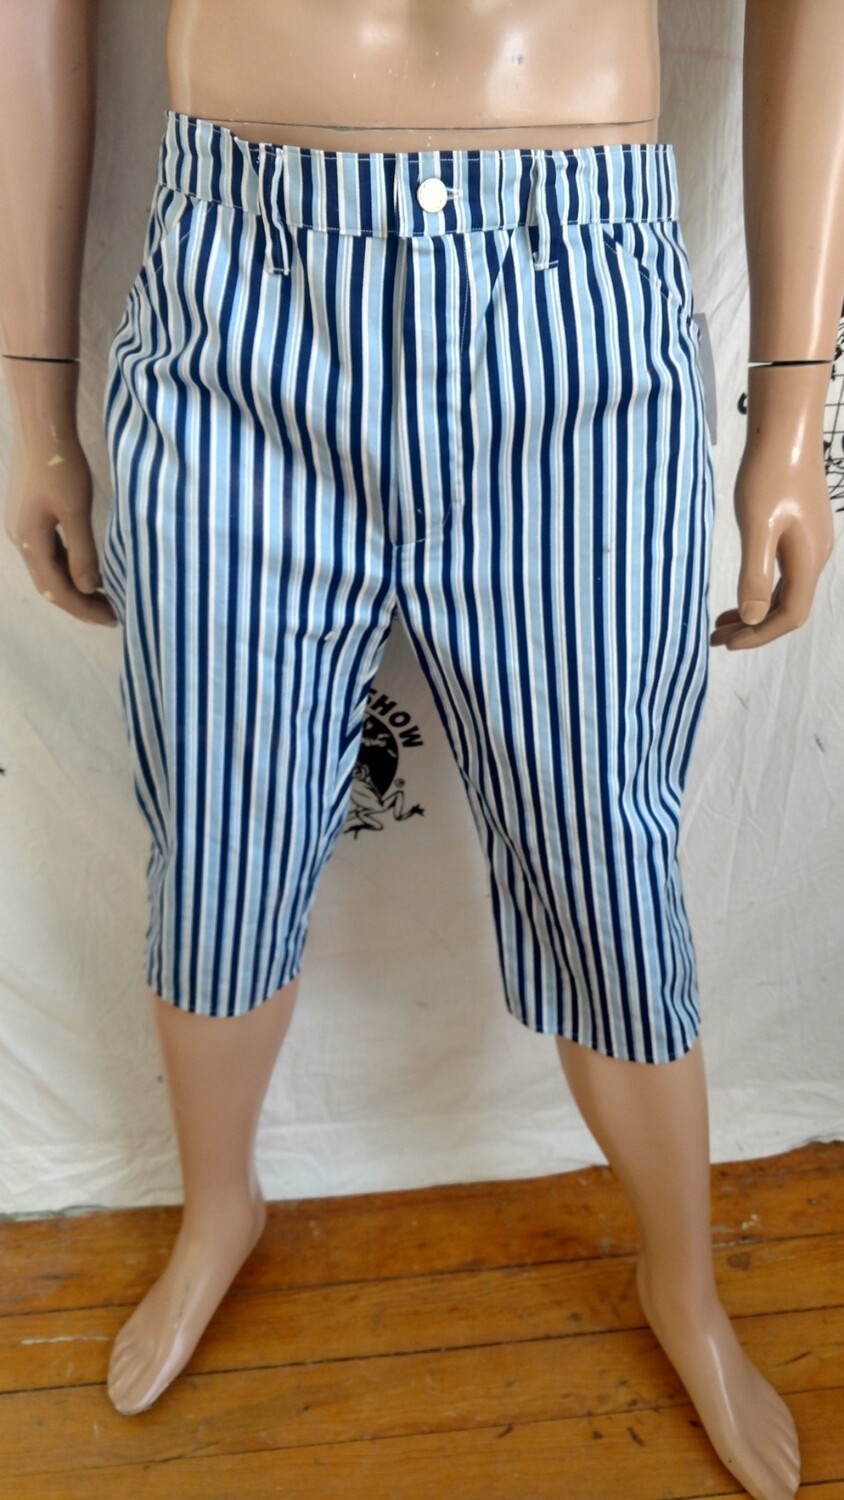 Hermans Eco Shorts pants Striped 36 x 16 Jeans USA